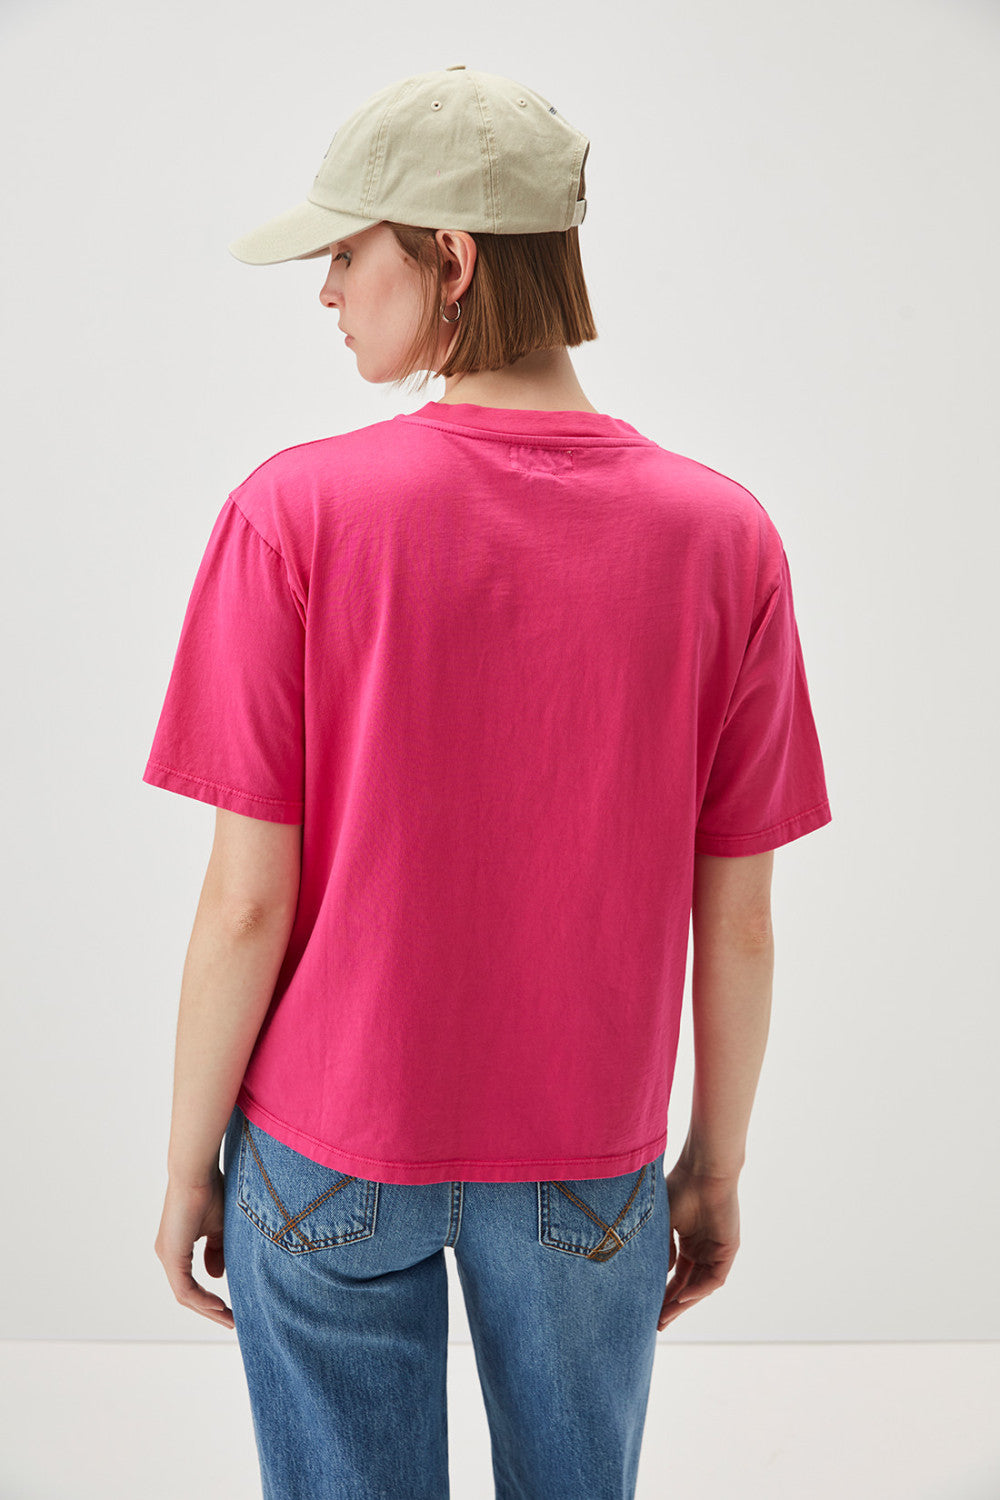 Roy Rogers T-shirt donna pocket